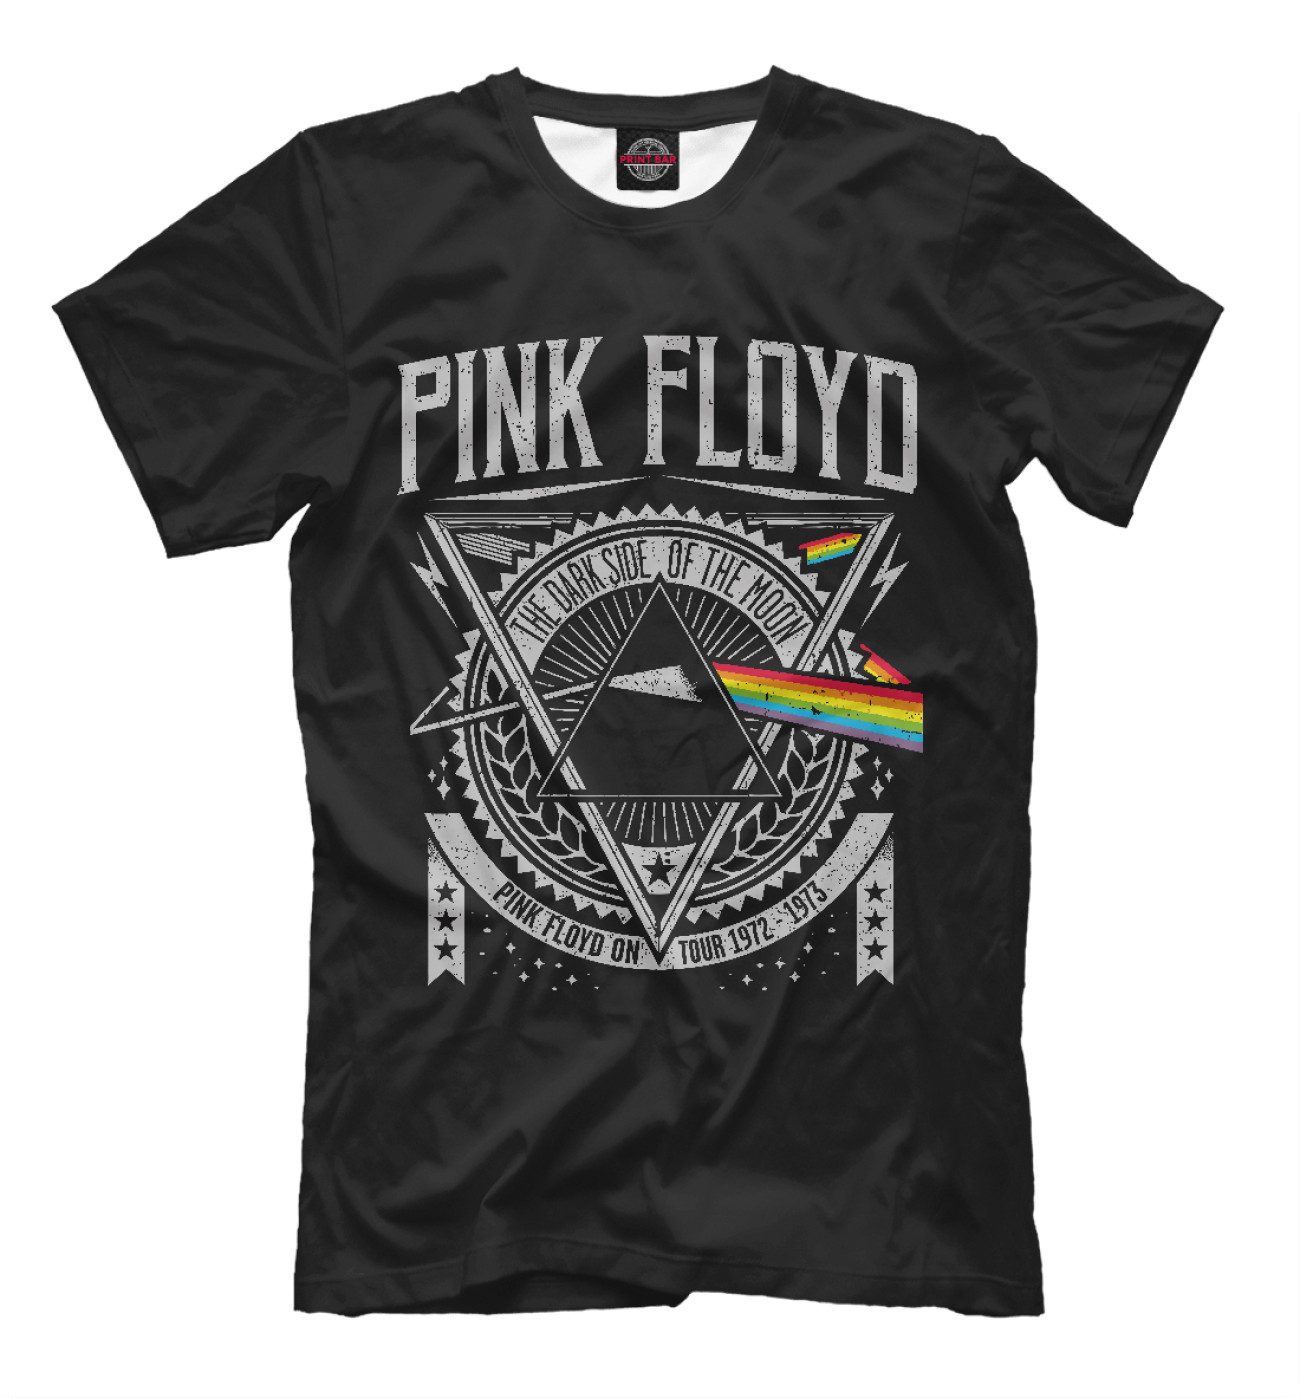 Мужская Футболка Pink Floyd, артикул: PFL-633401-fut-2